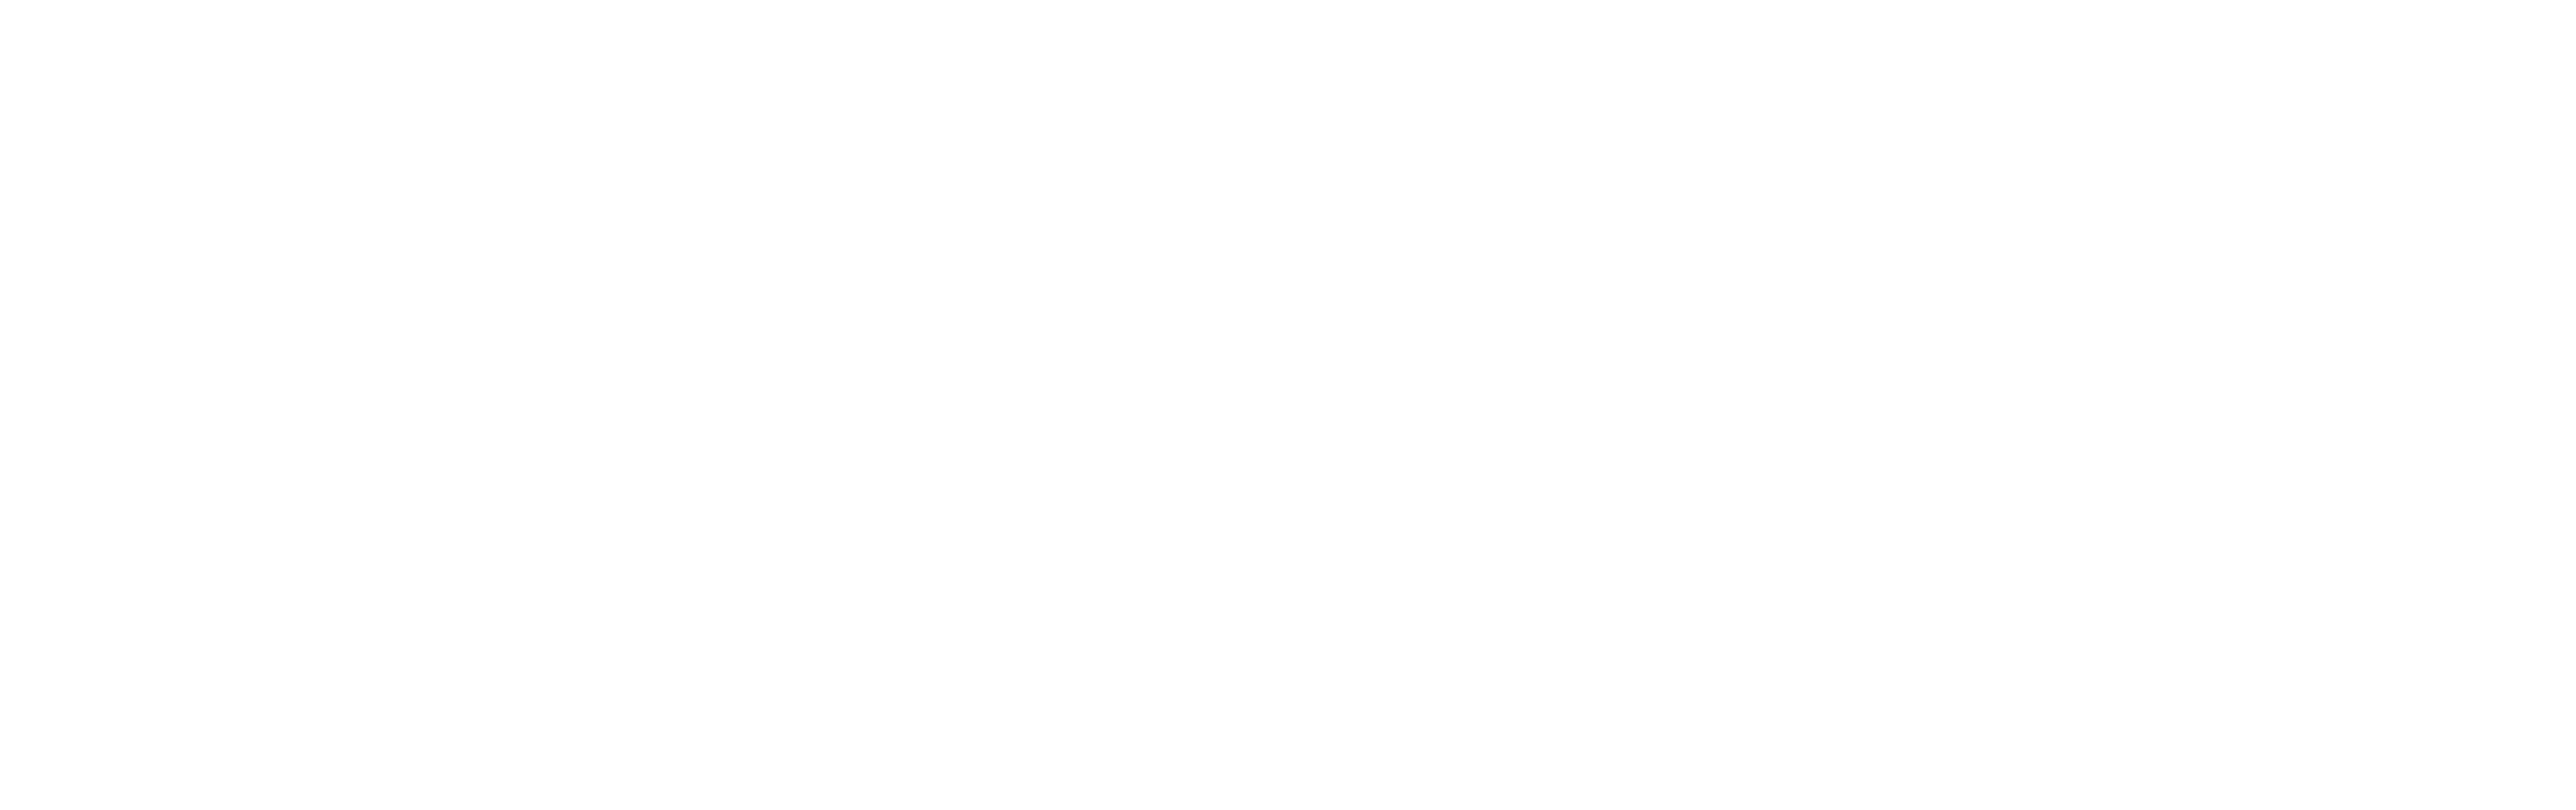 Linkers white logo